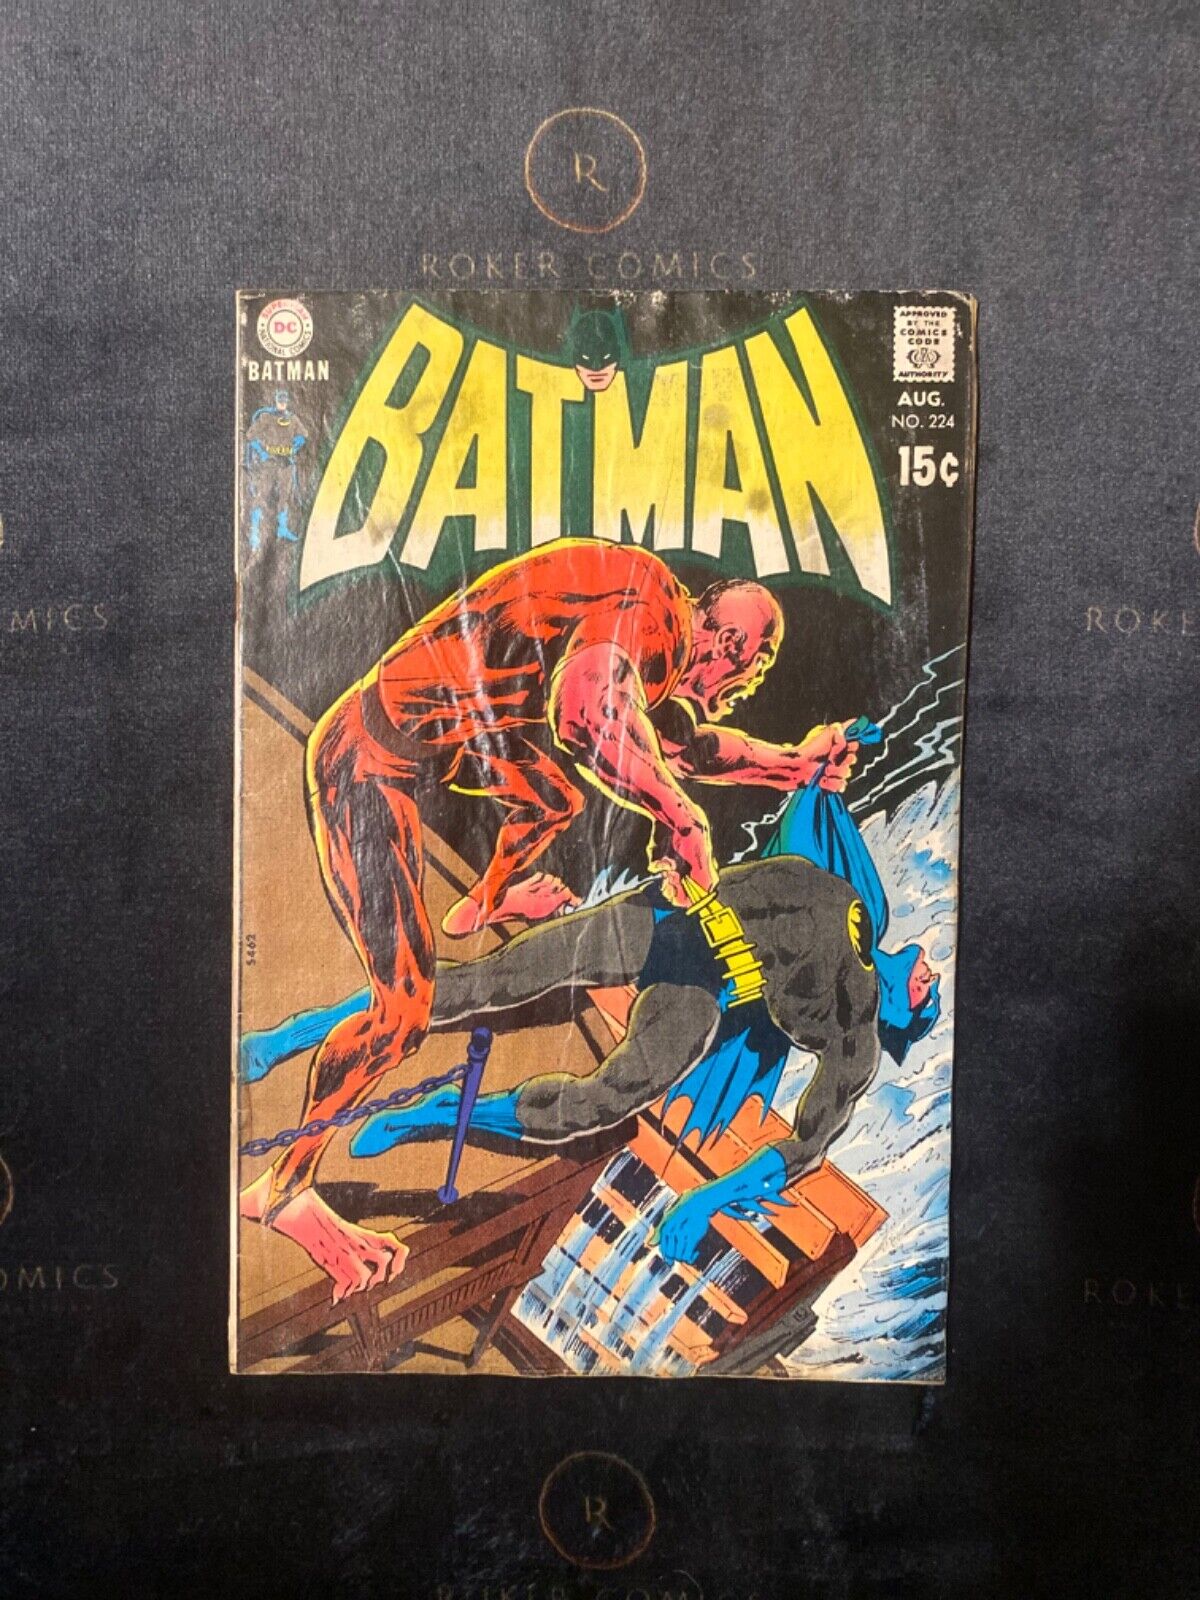 Very Rare 1970 Batman #224